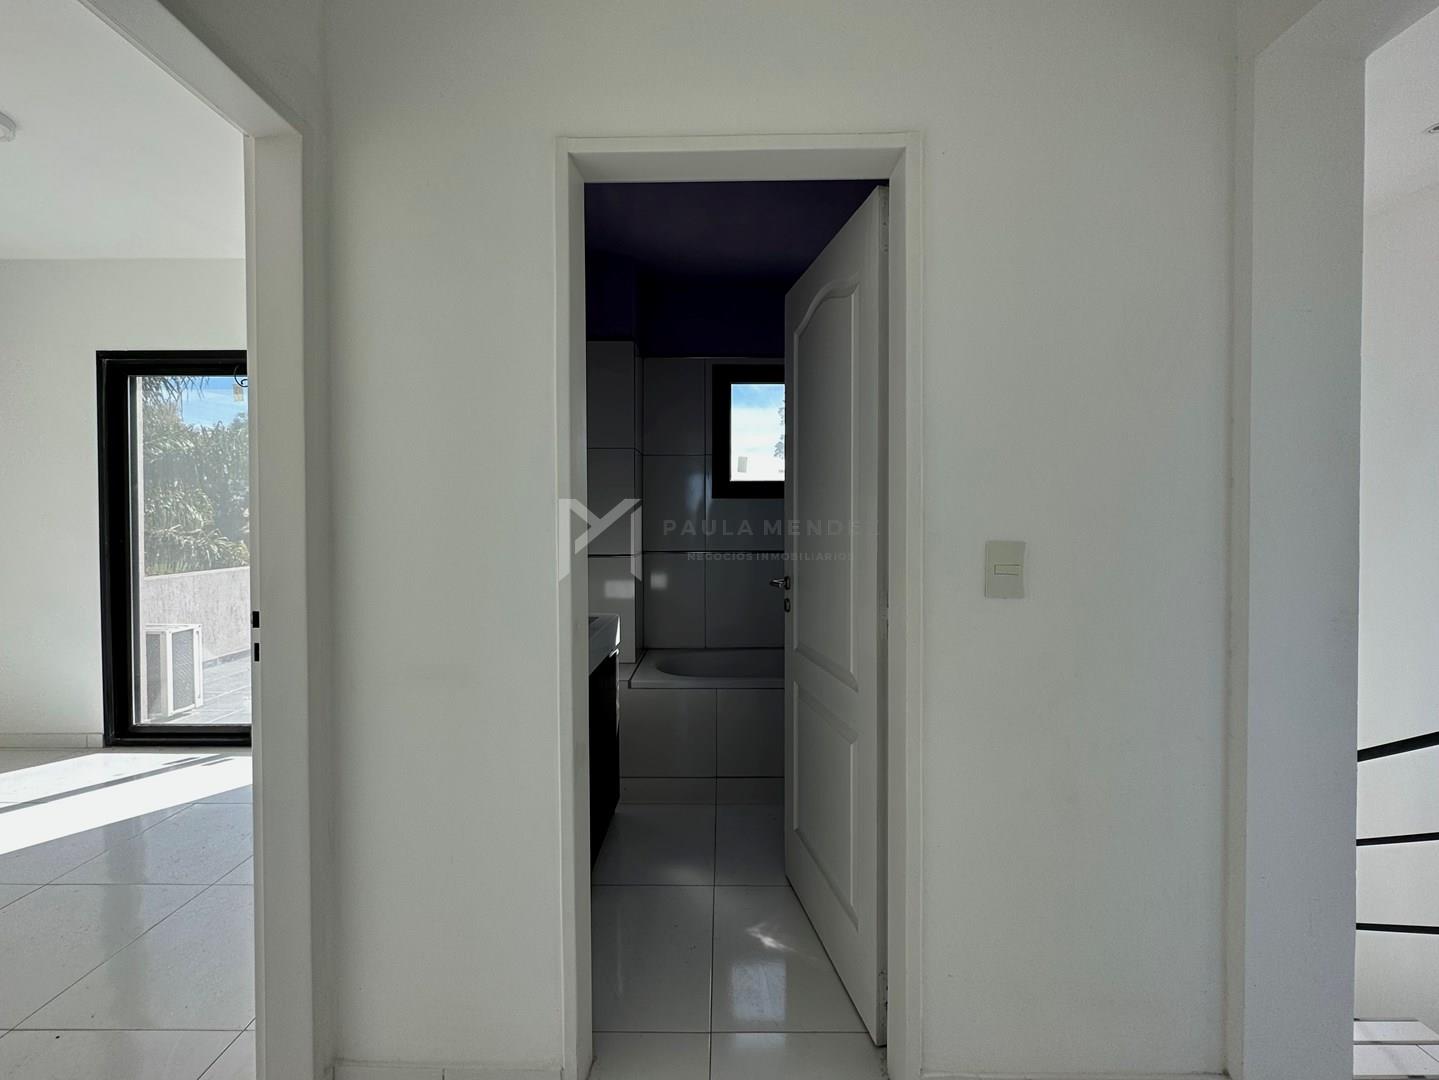 #4988606 | Alquiler | Casa | San Matias (Paula Mendez Negocios Inmobiliarios)